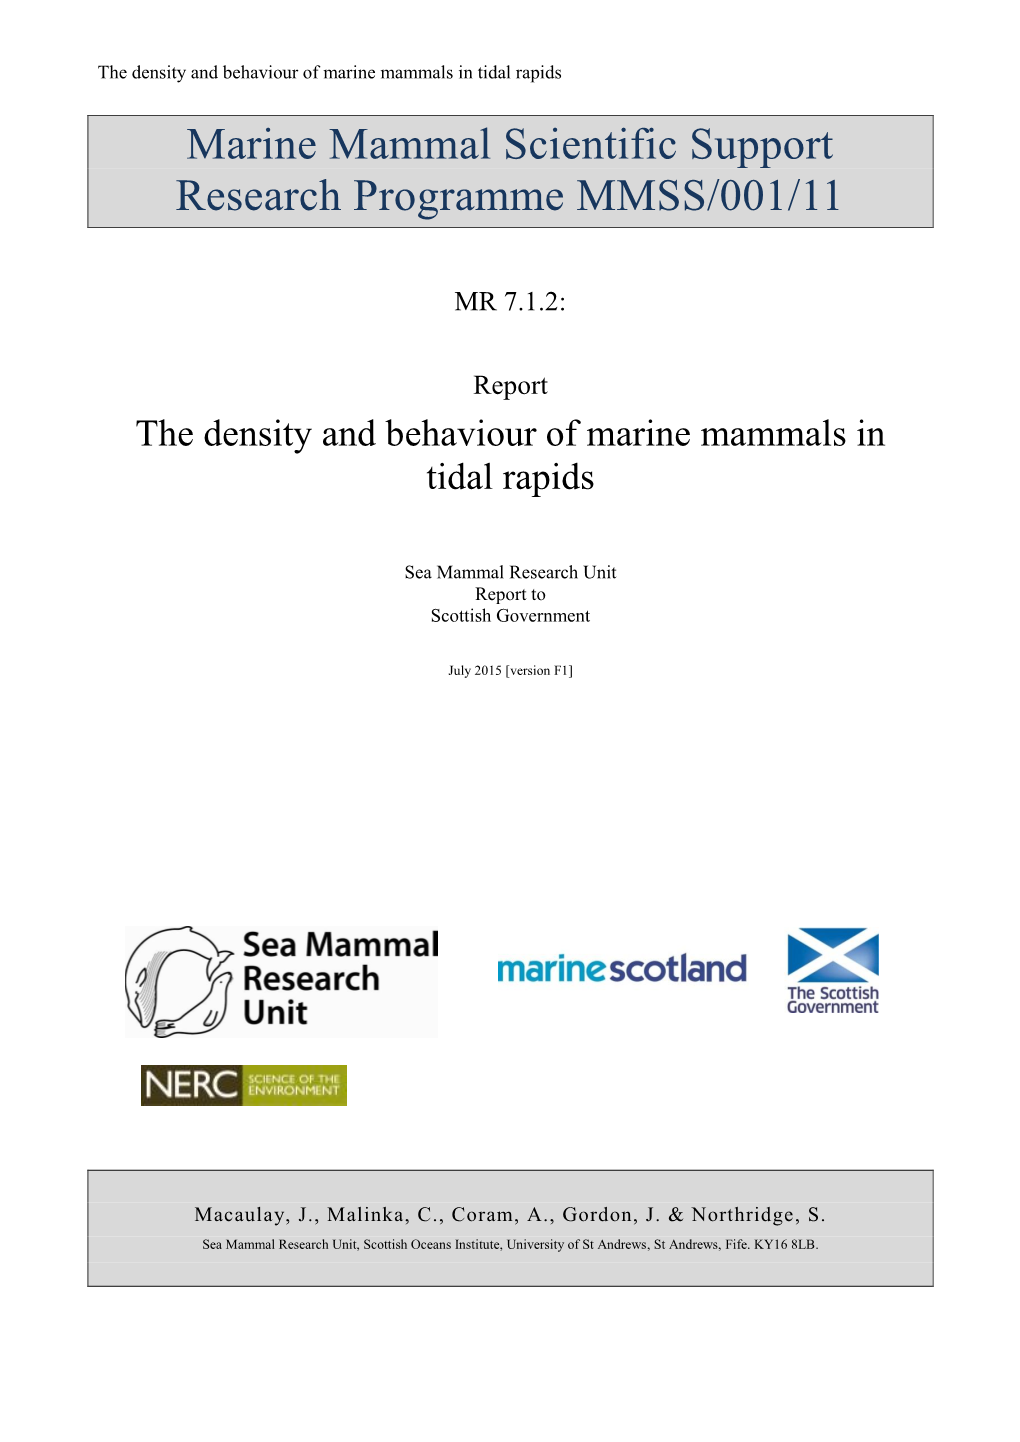 The Density and Behaviour of Marine Mammals in Tidal Rapids